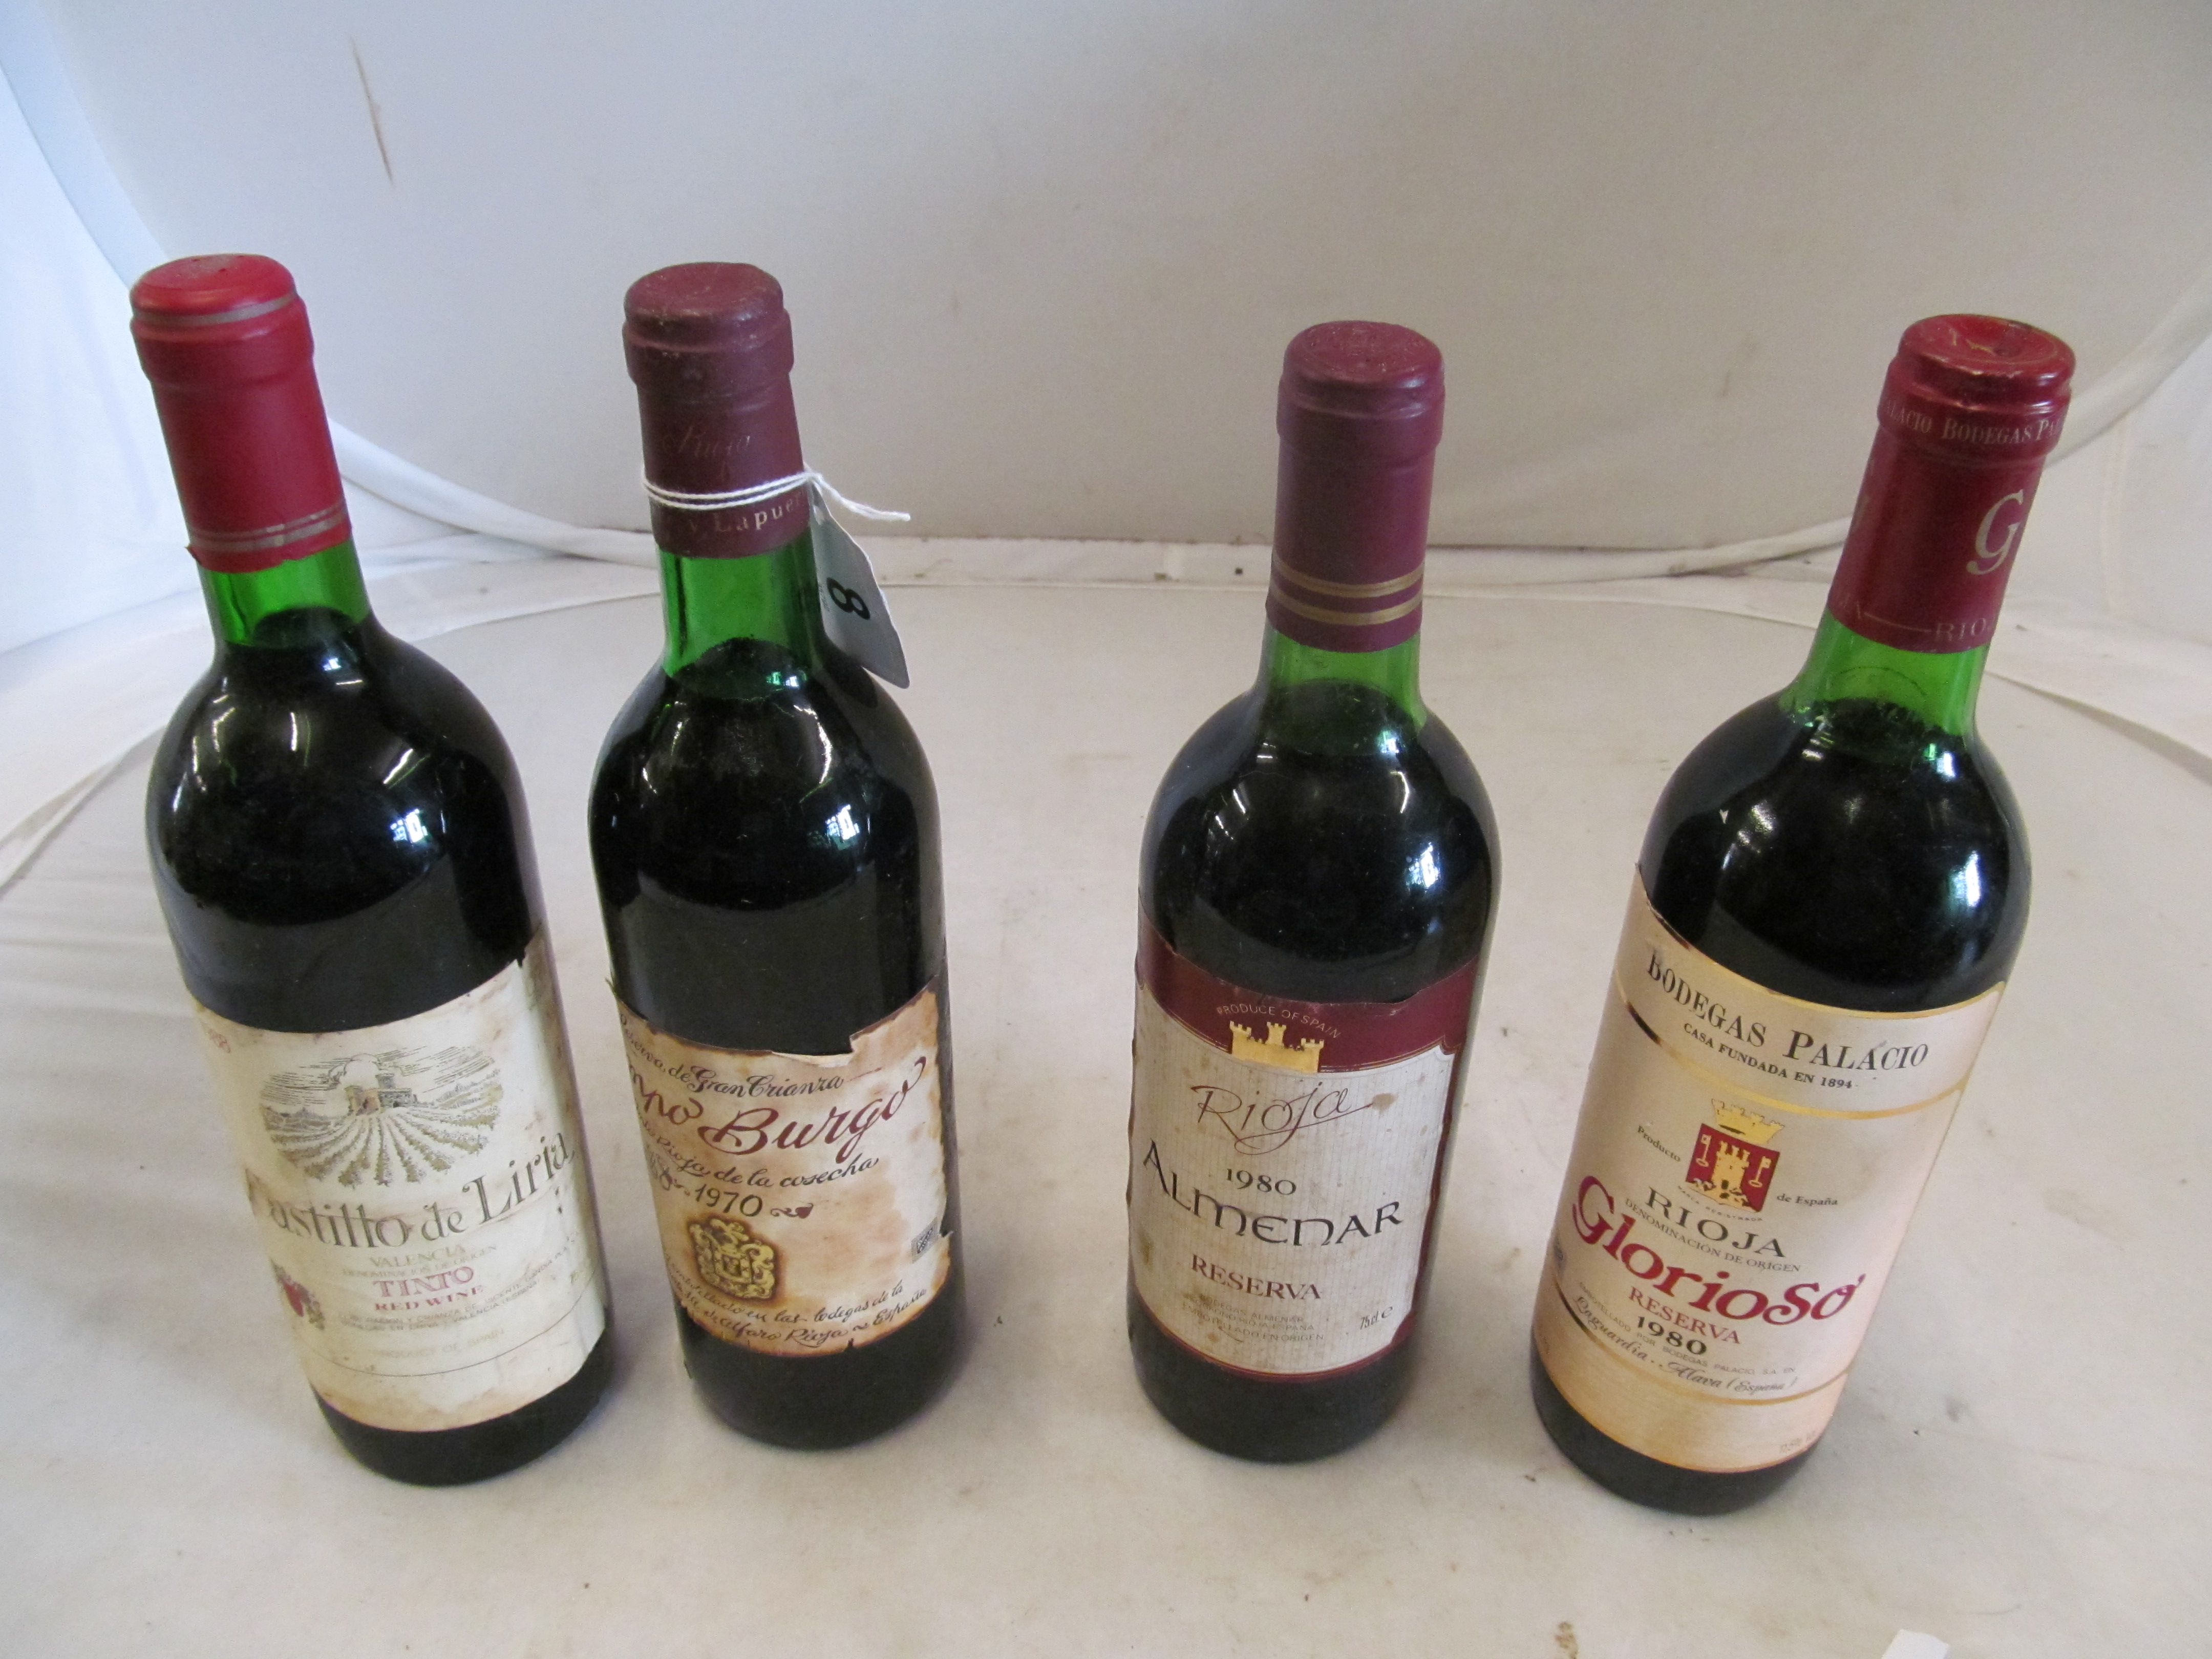 A 1970 Campo Burgo and three bottles of Rioja.